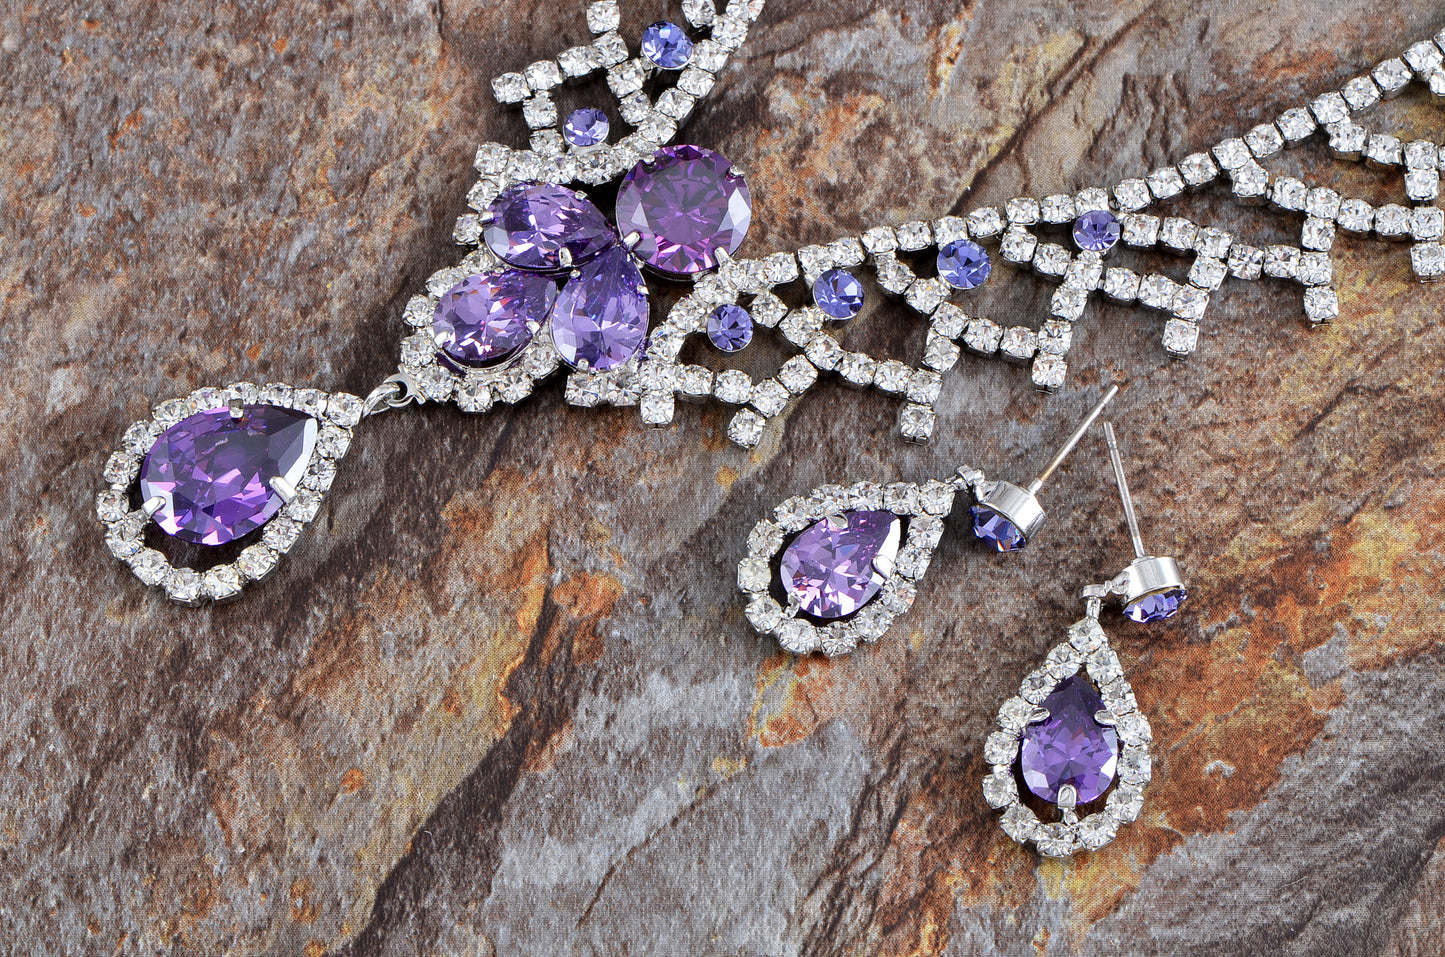 Swarovski Crystal Elements Bridal Amethyst Teardrop Collar Necklace Earring Set